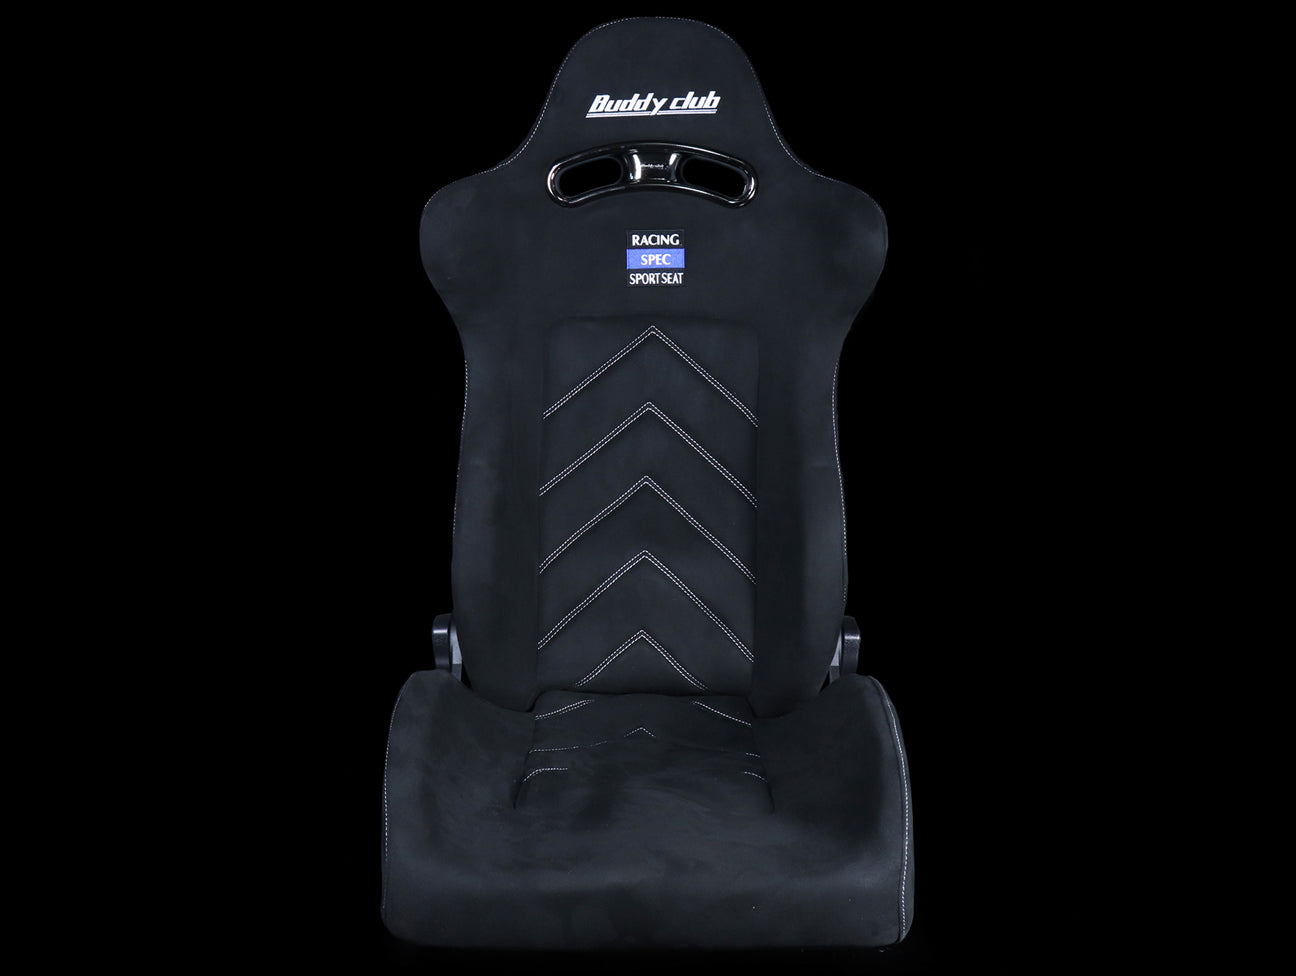 Buddy Club Racing Spec Sport Reclineable Seat - Black